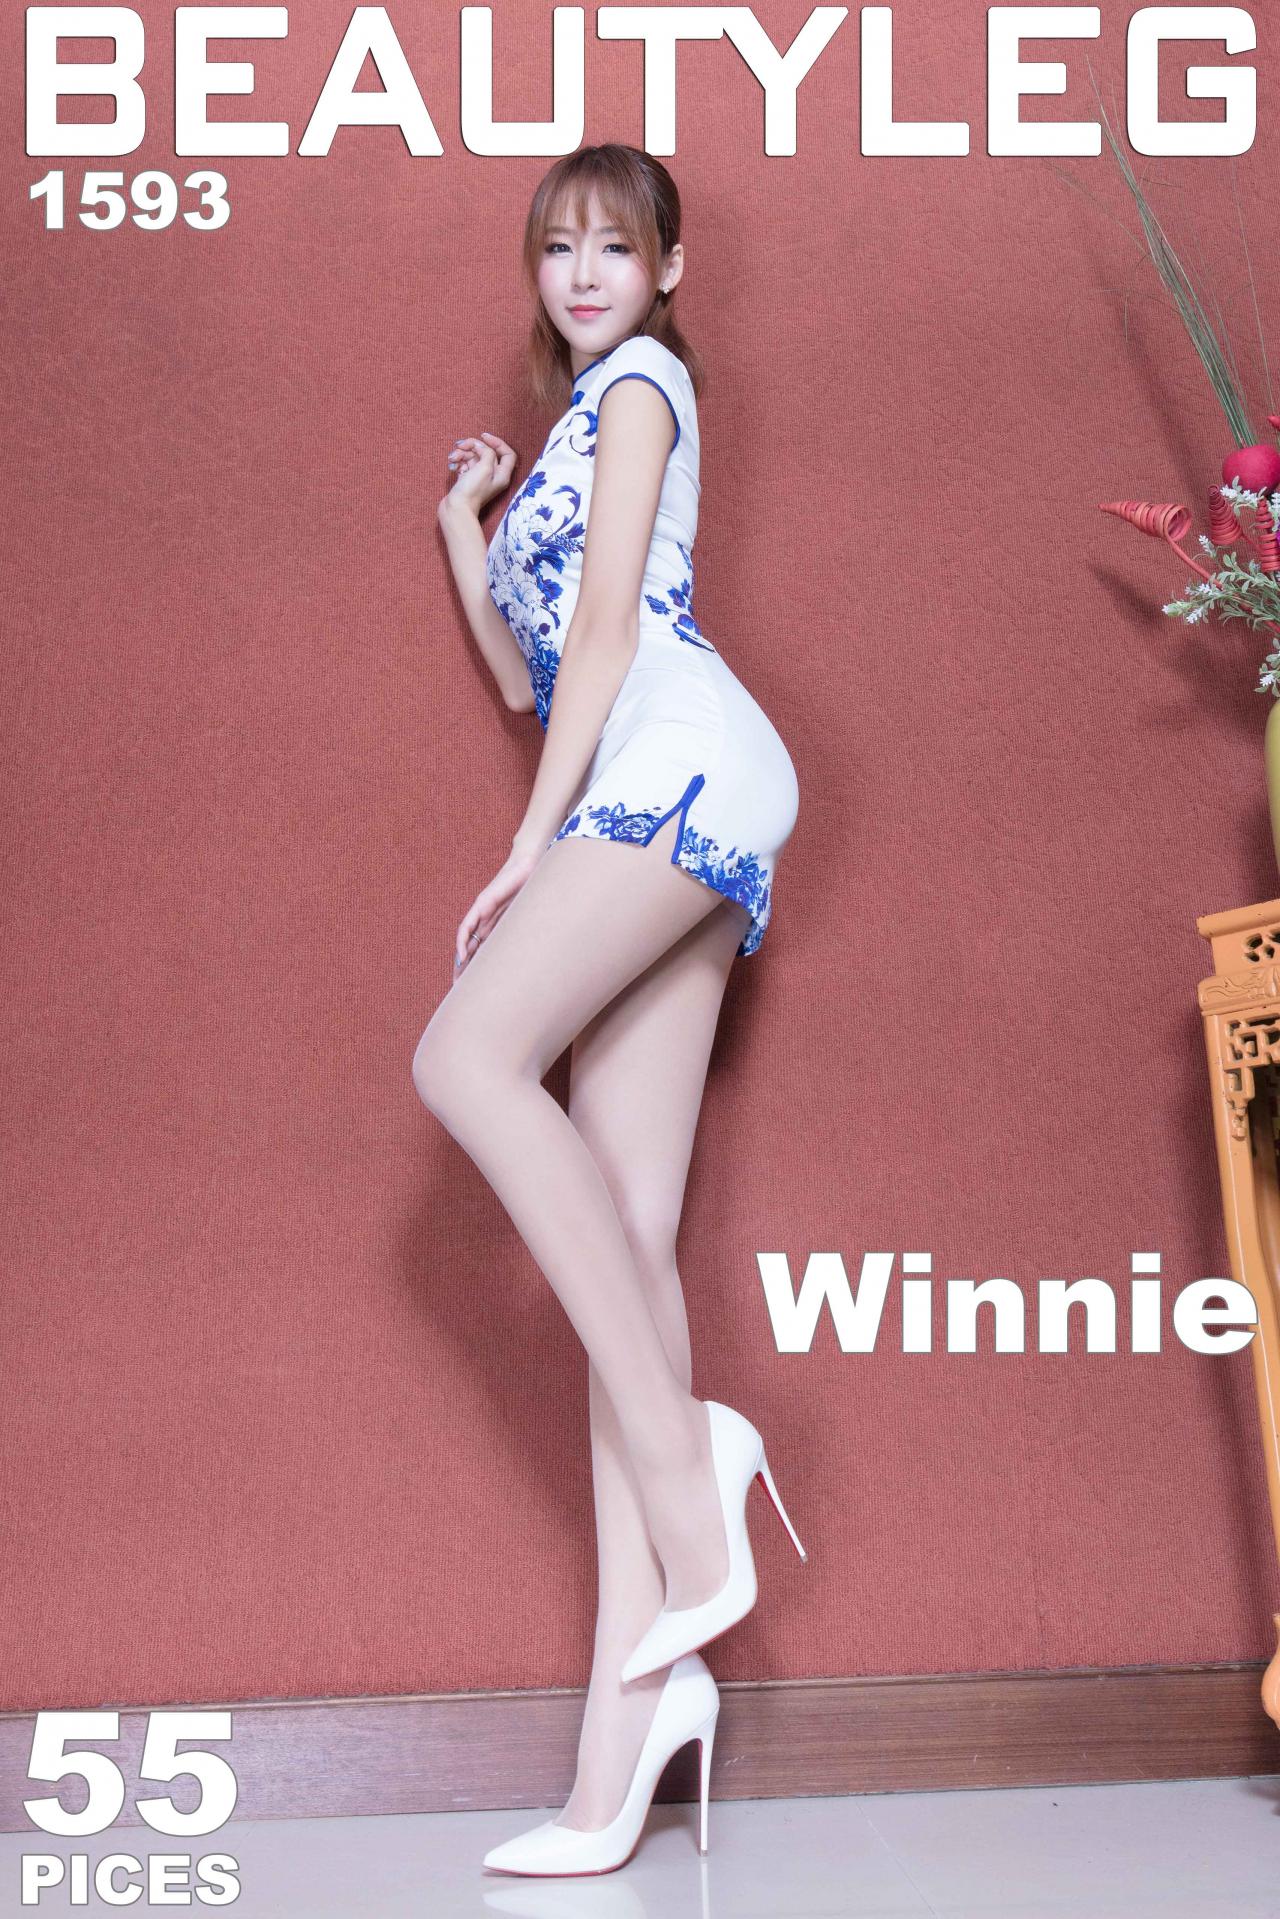 [Beautyleg] 美腿寫真 2018.04.16 No.1593 Winnie [55P364M]